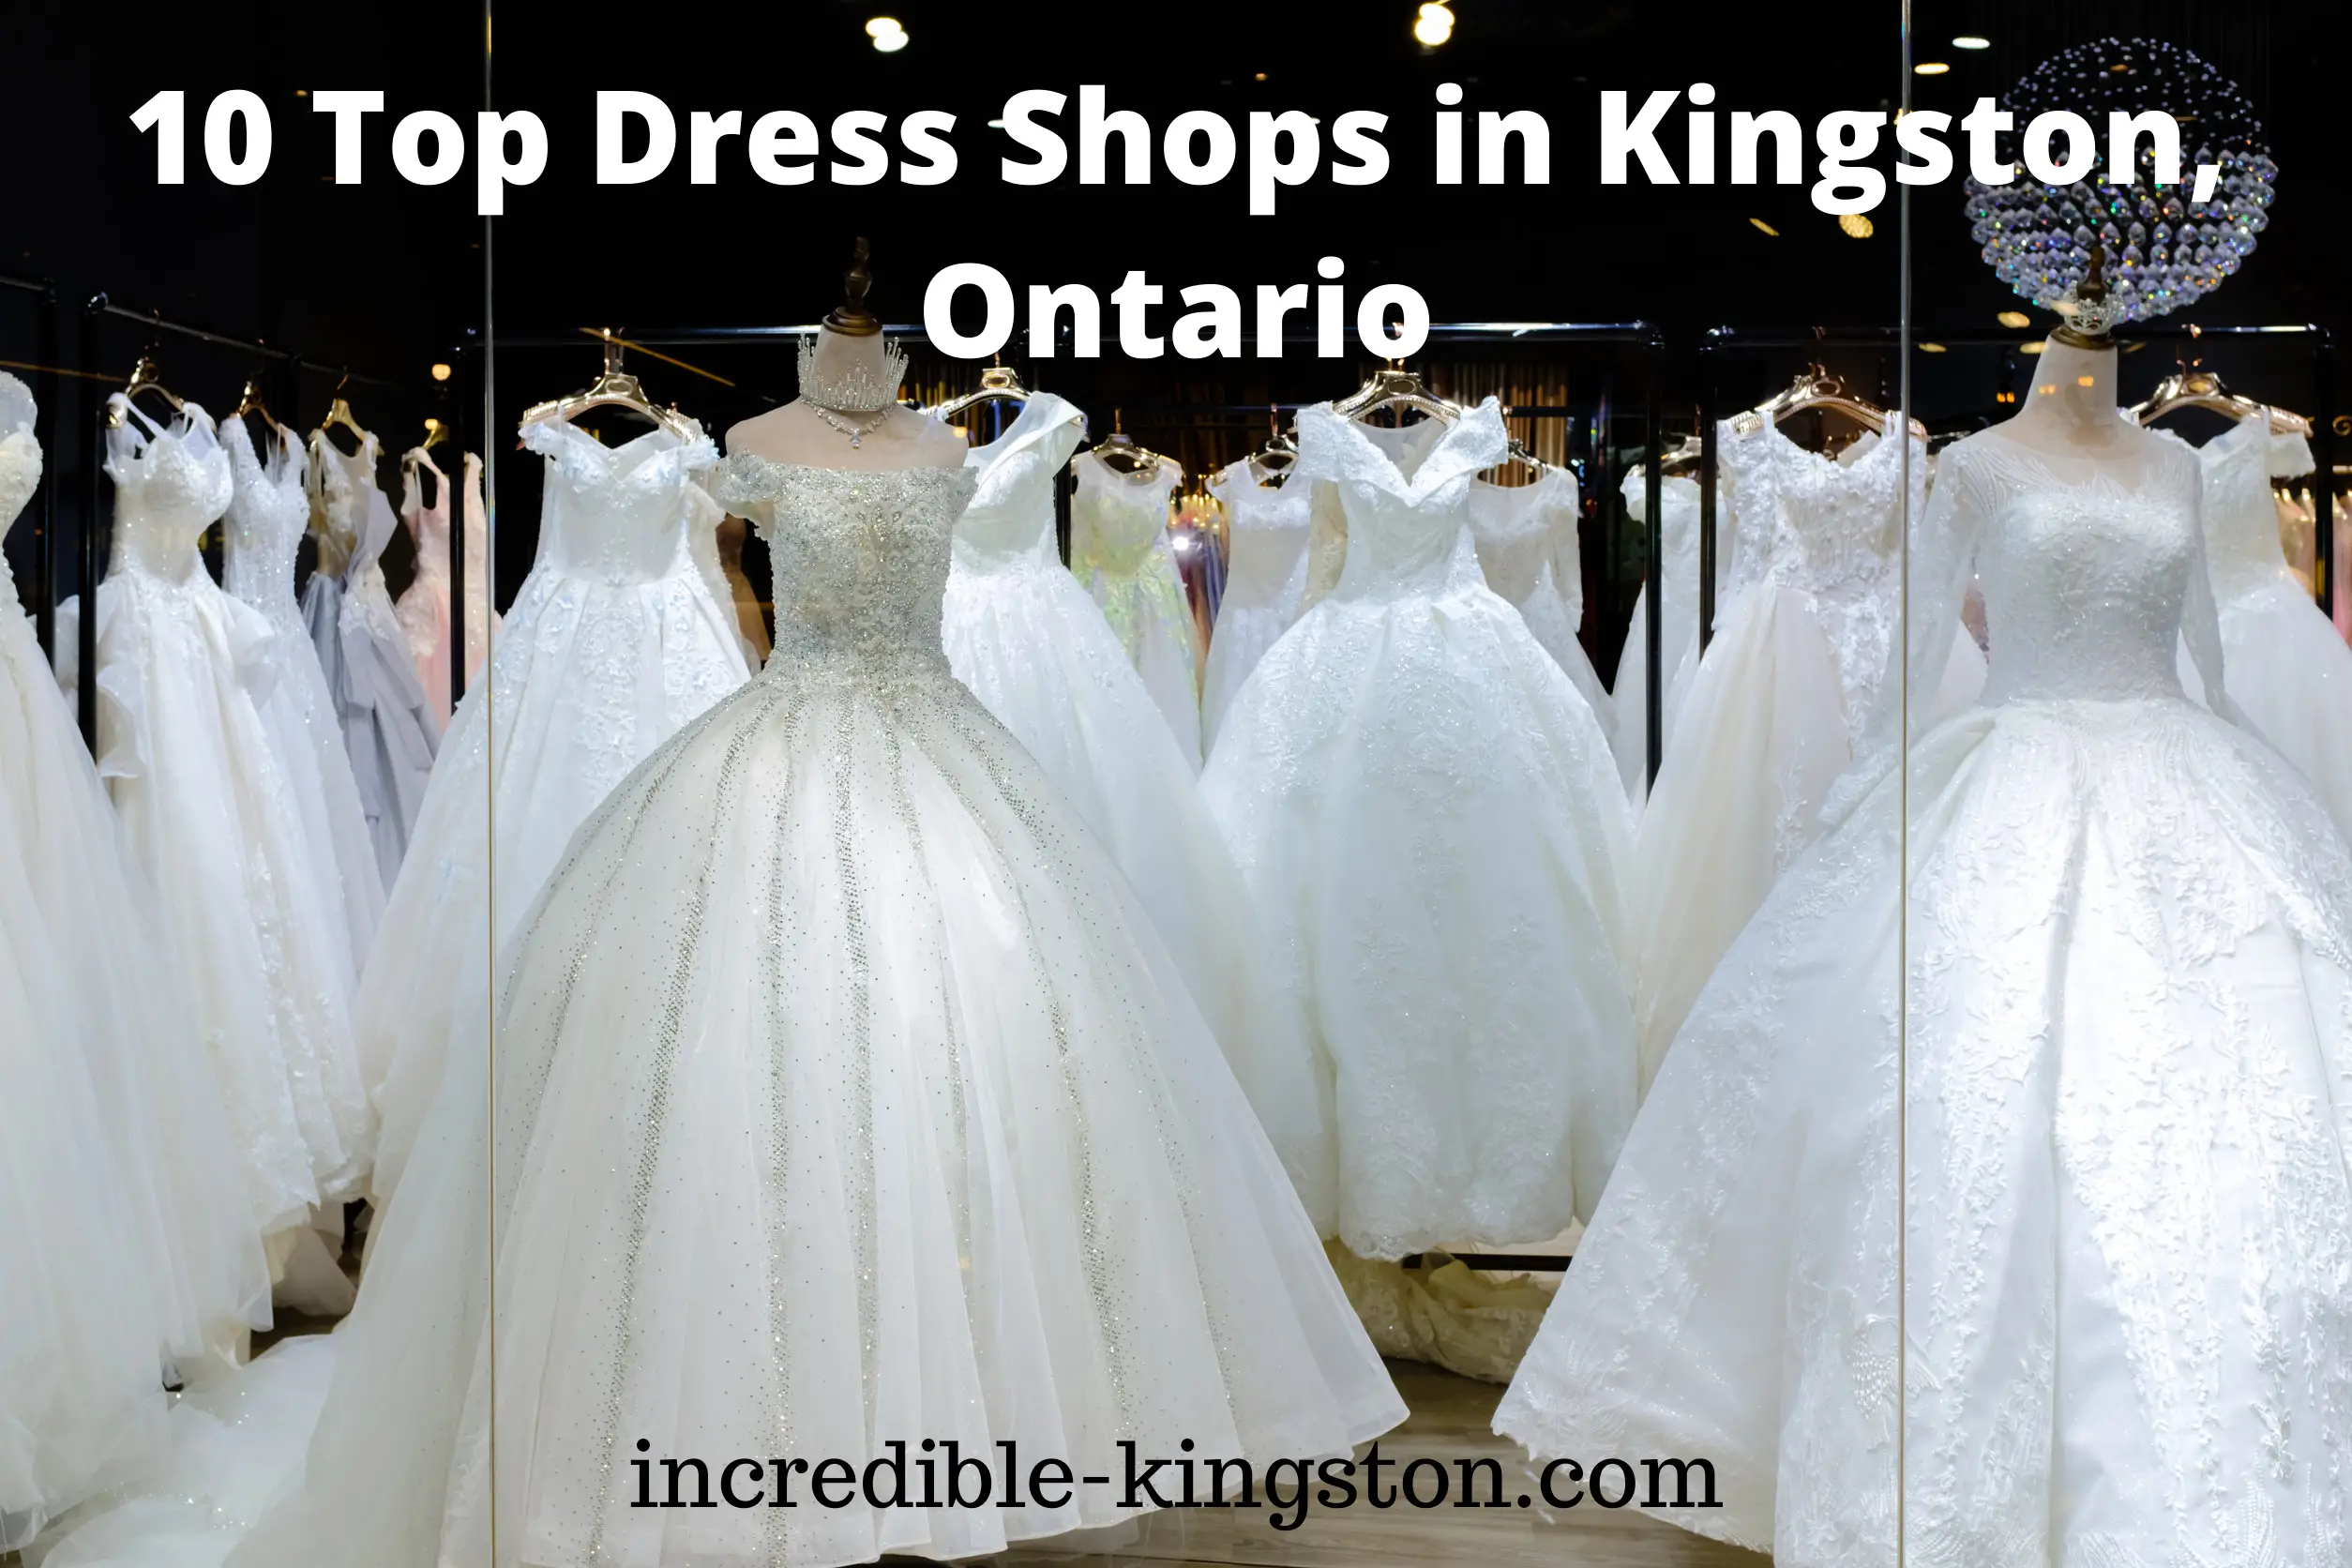 dress shops in Kingston, Ontario